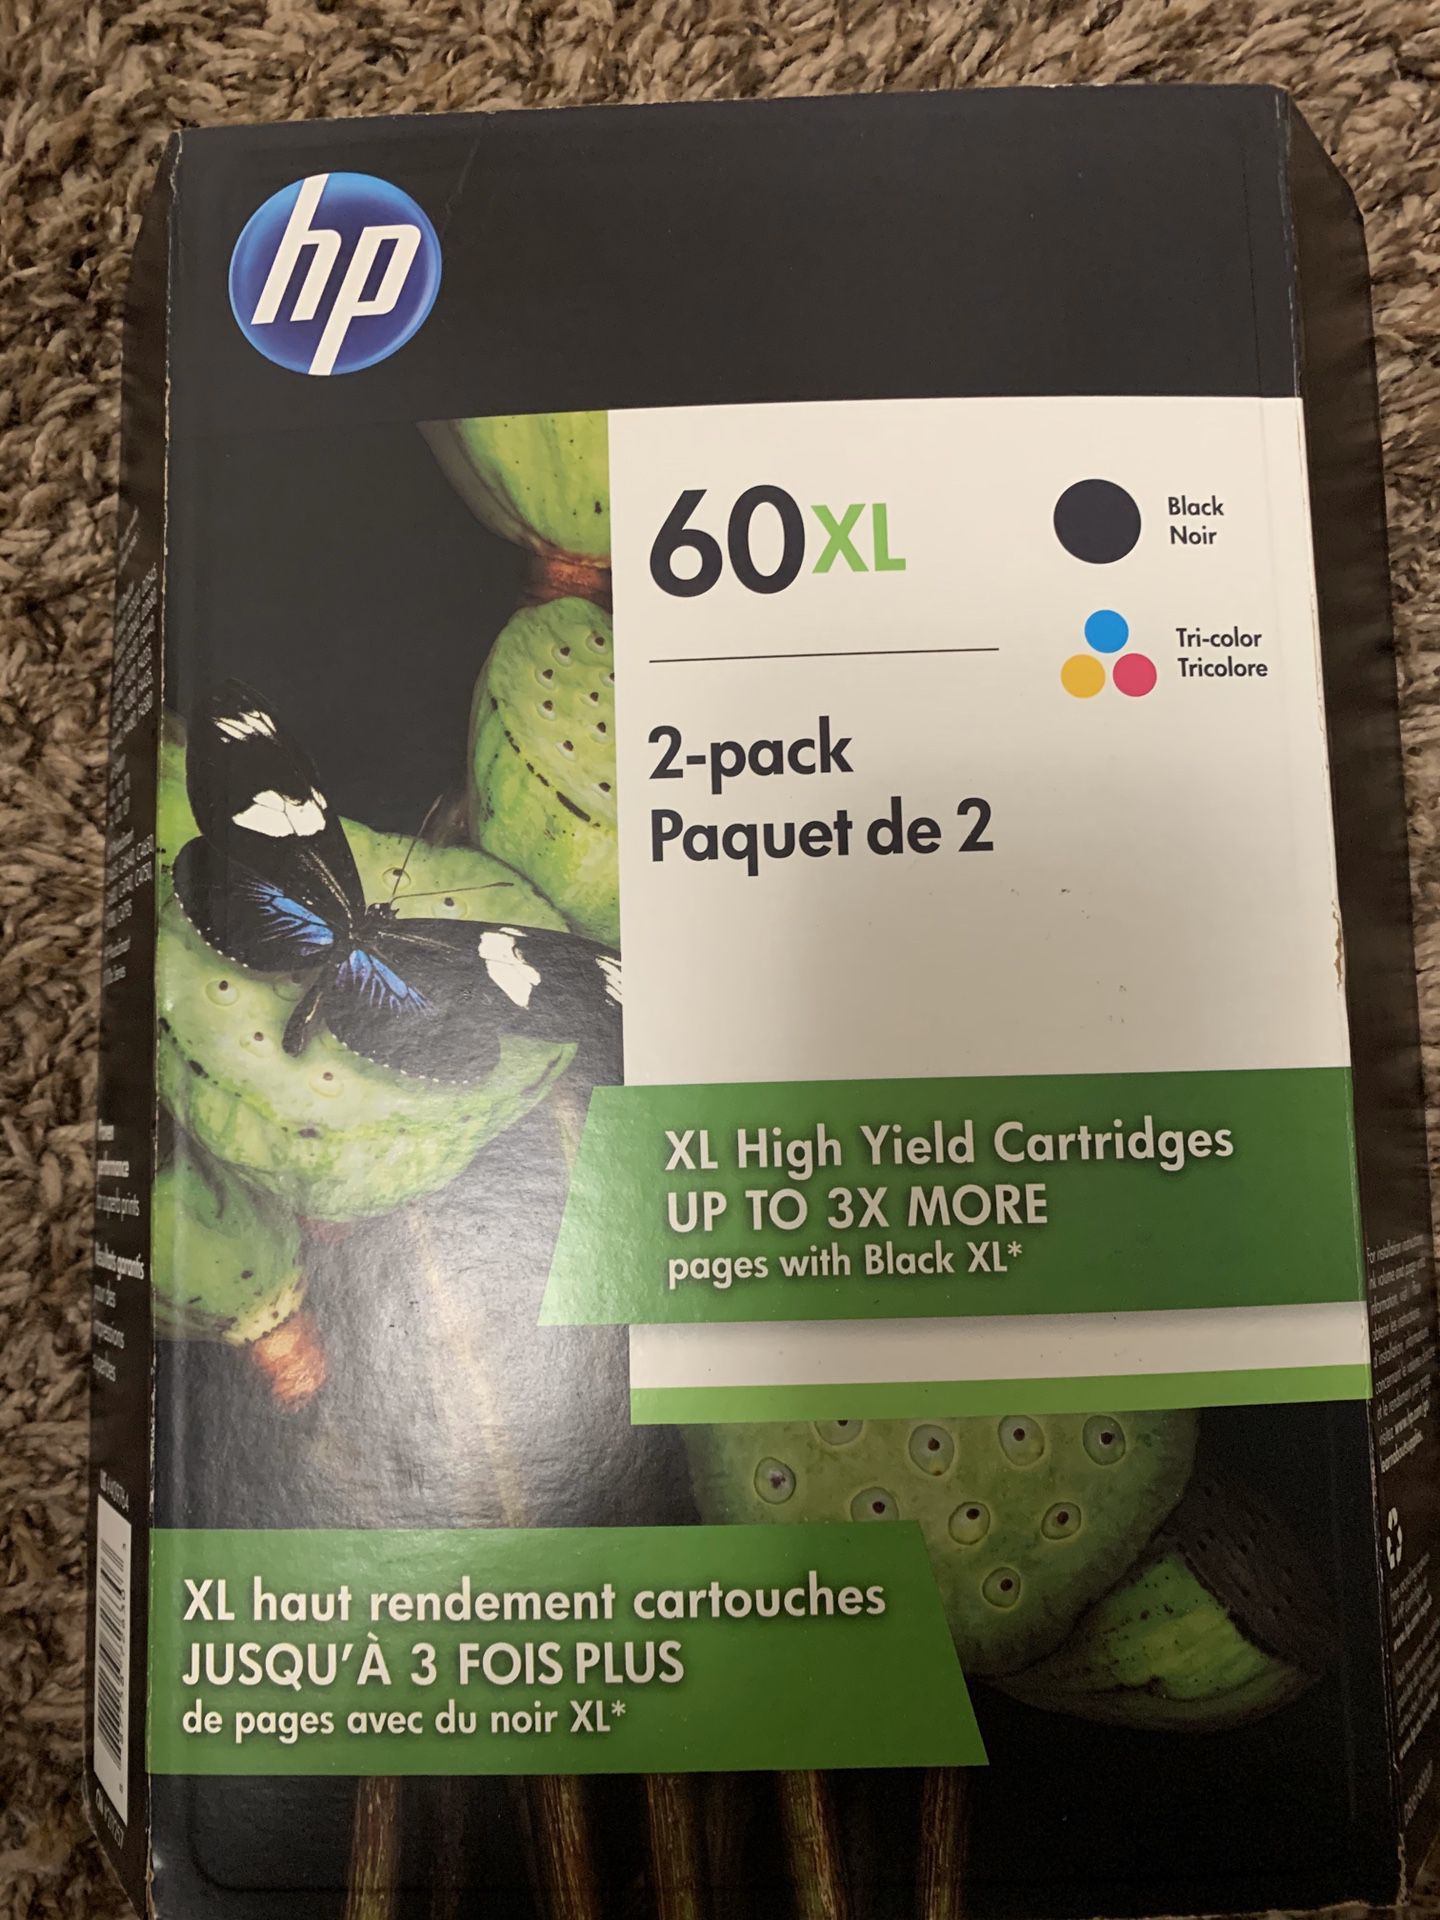 HP Ink Cartridges, new!